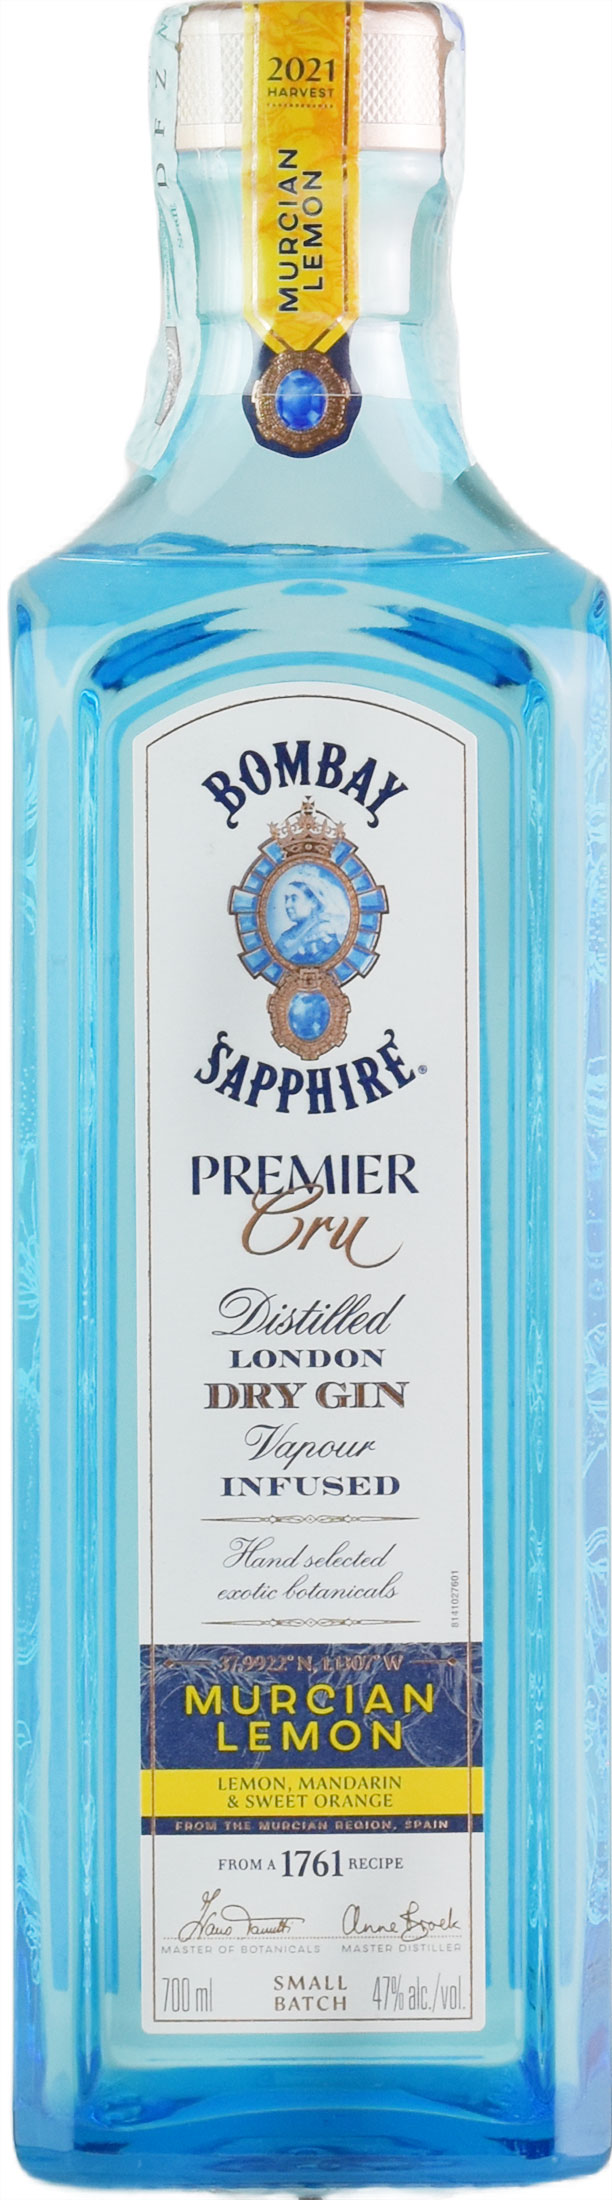 Bombay Sapphire Premier Cru Gin